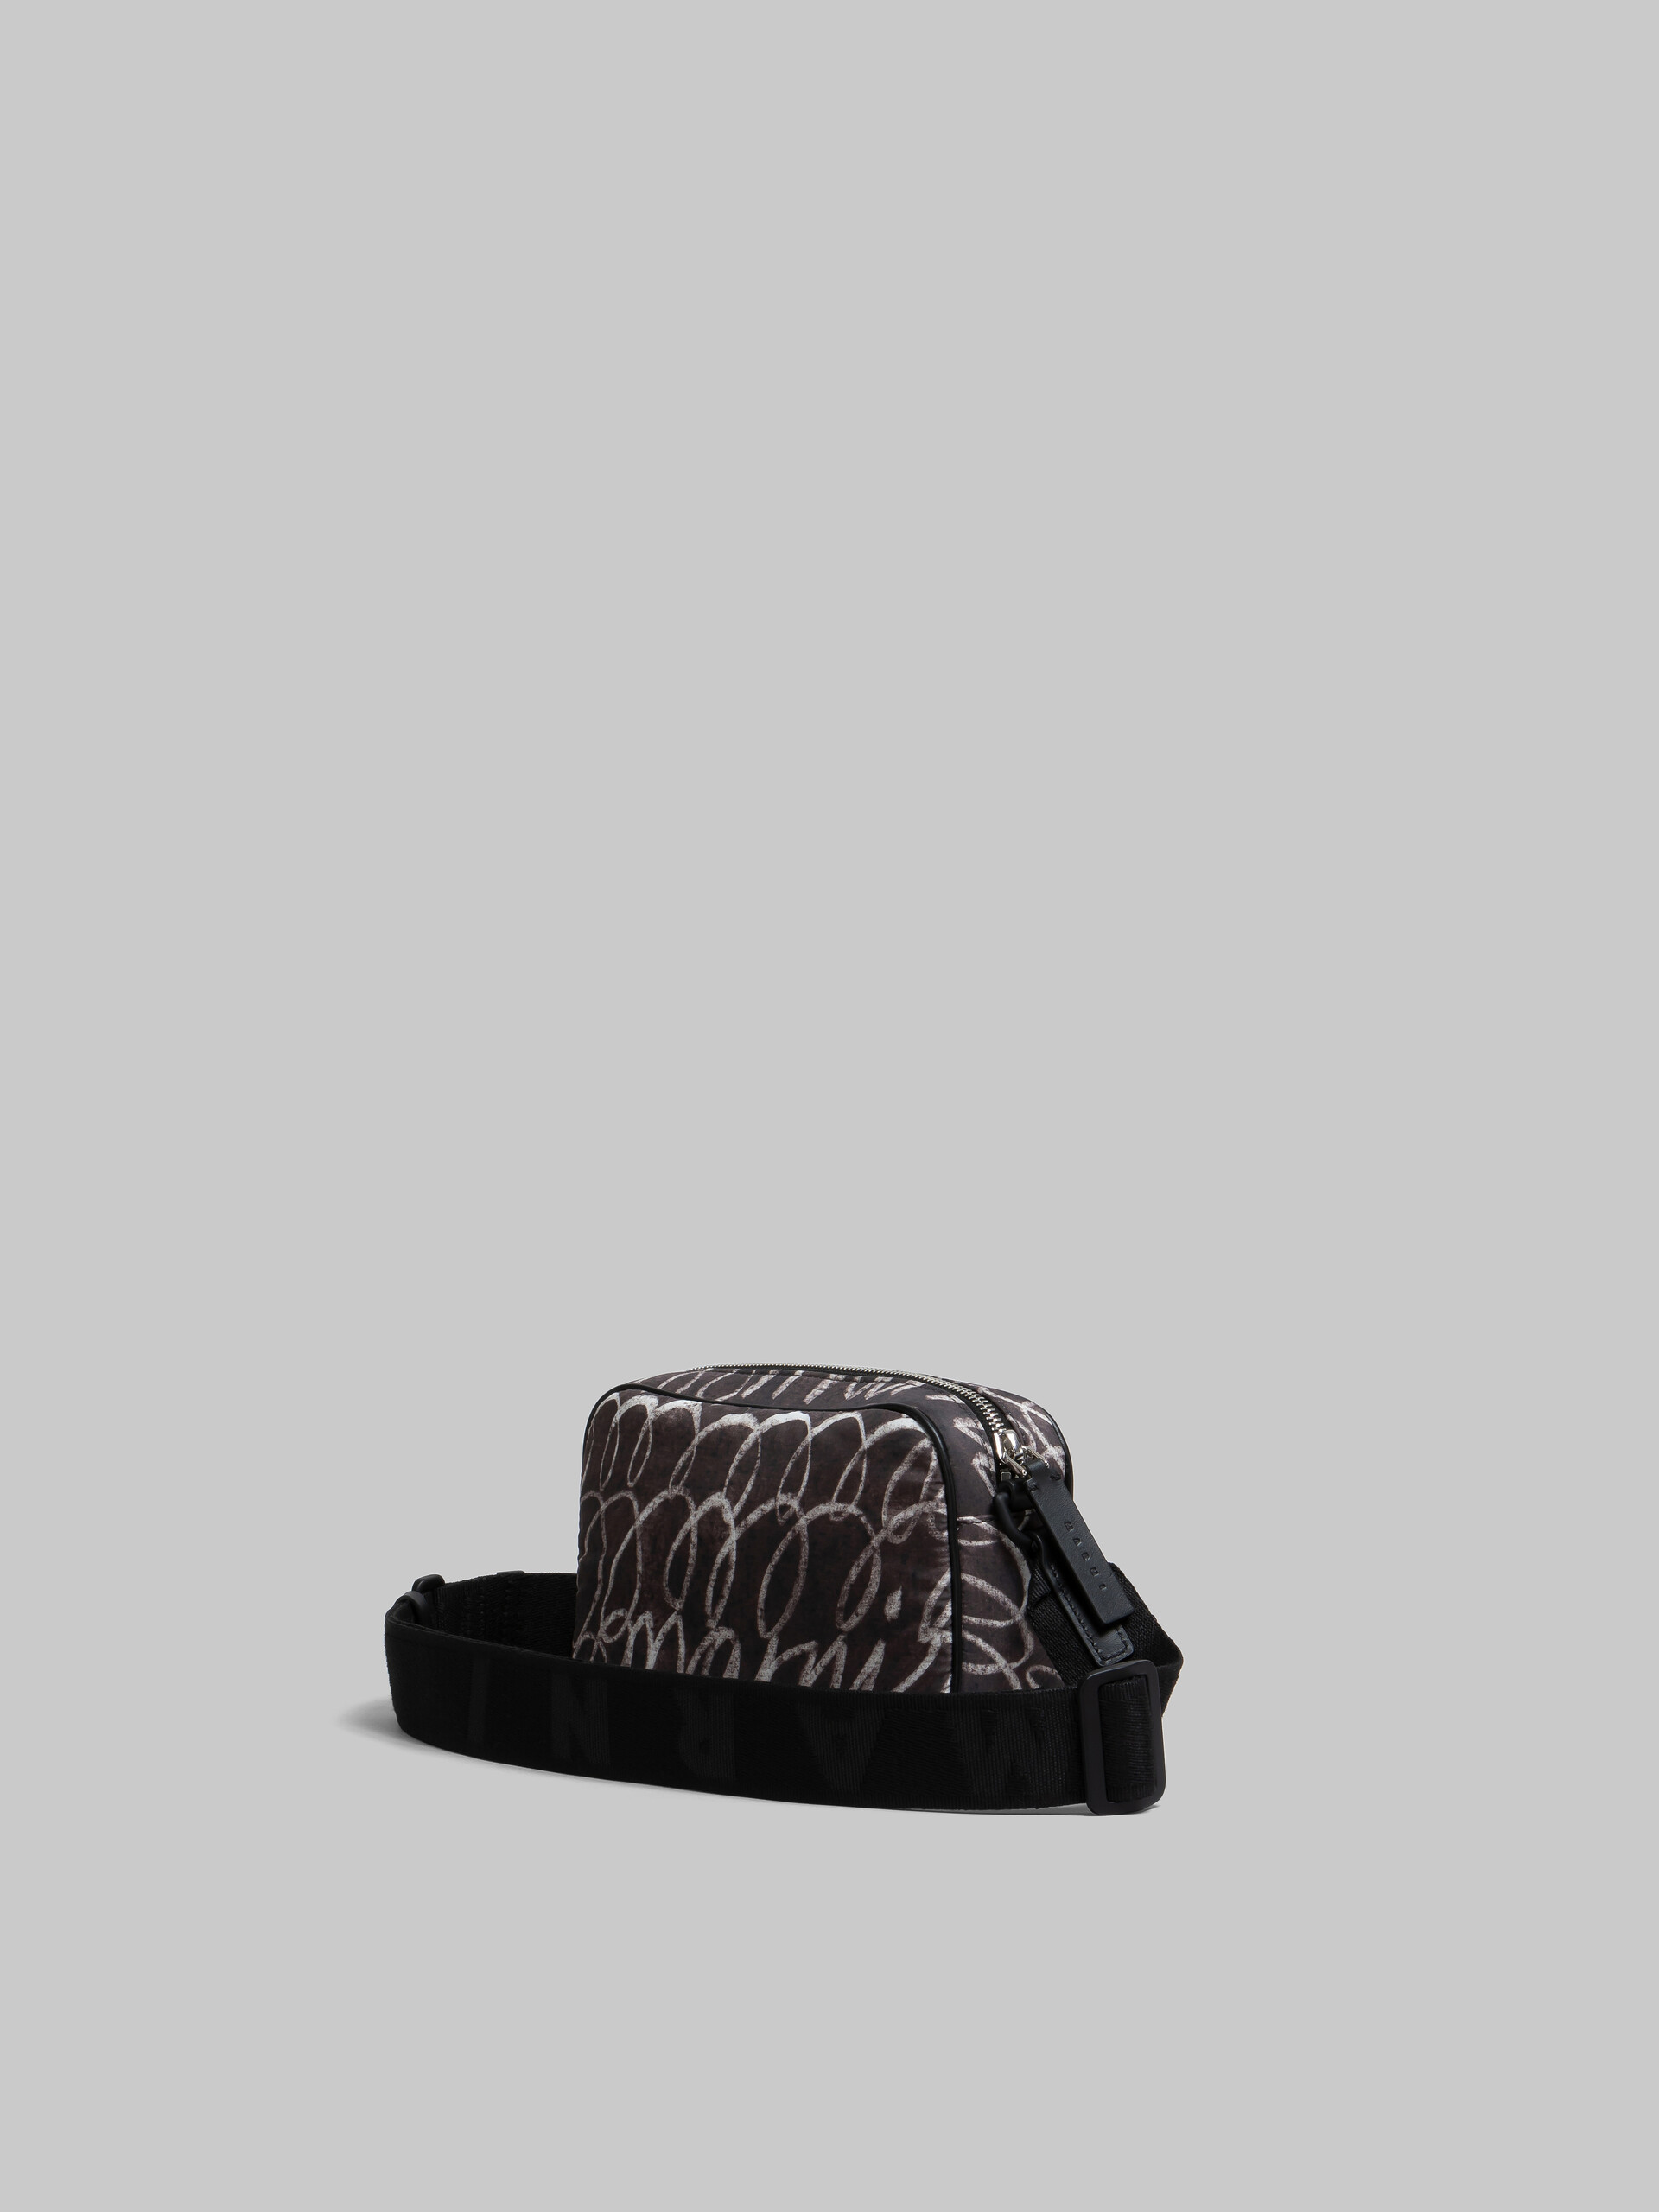 Bolso para cámara Puff negro con estampado Marni Scribble - Bolsos de hombro - Image 3